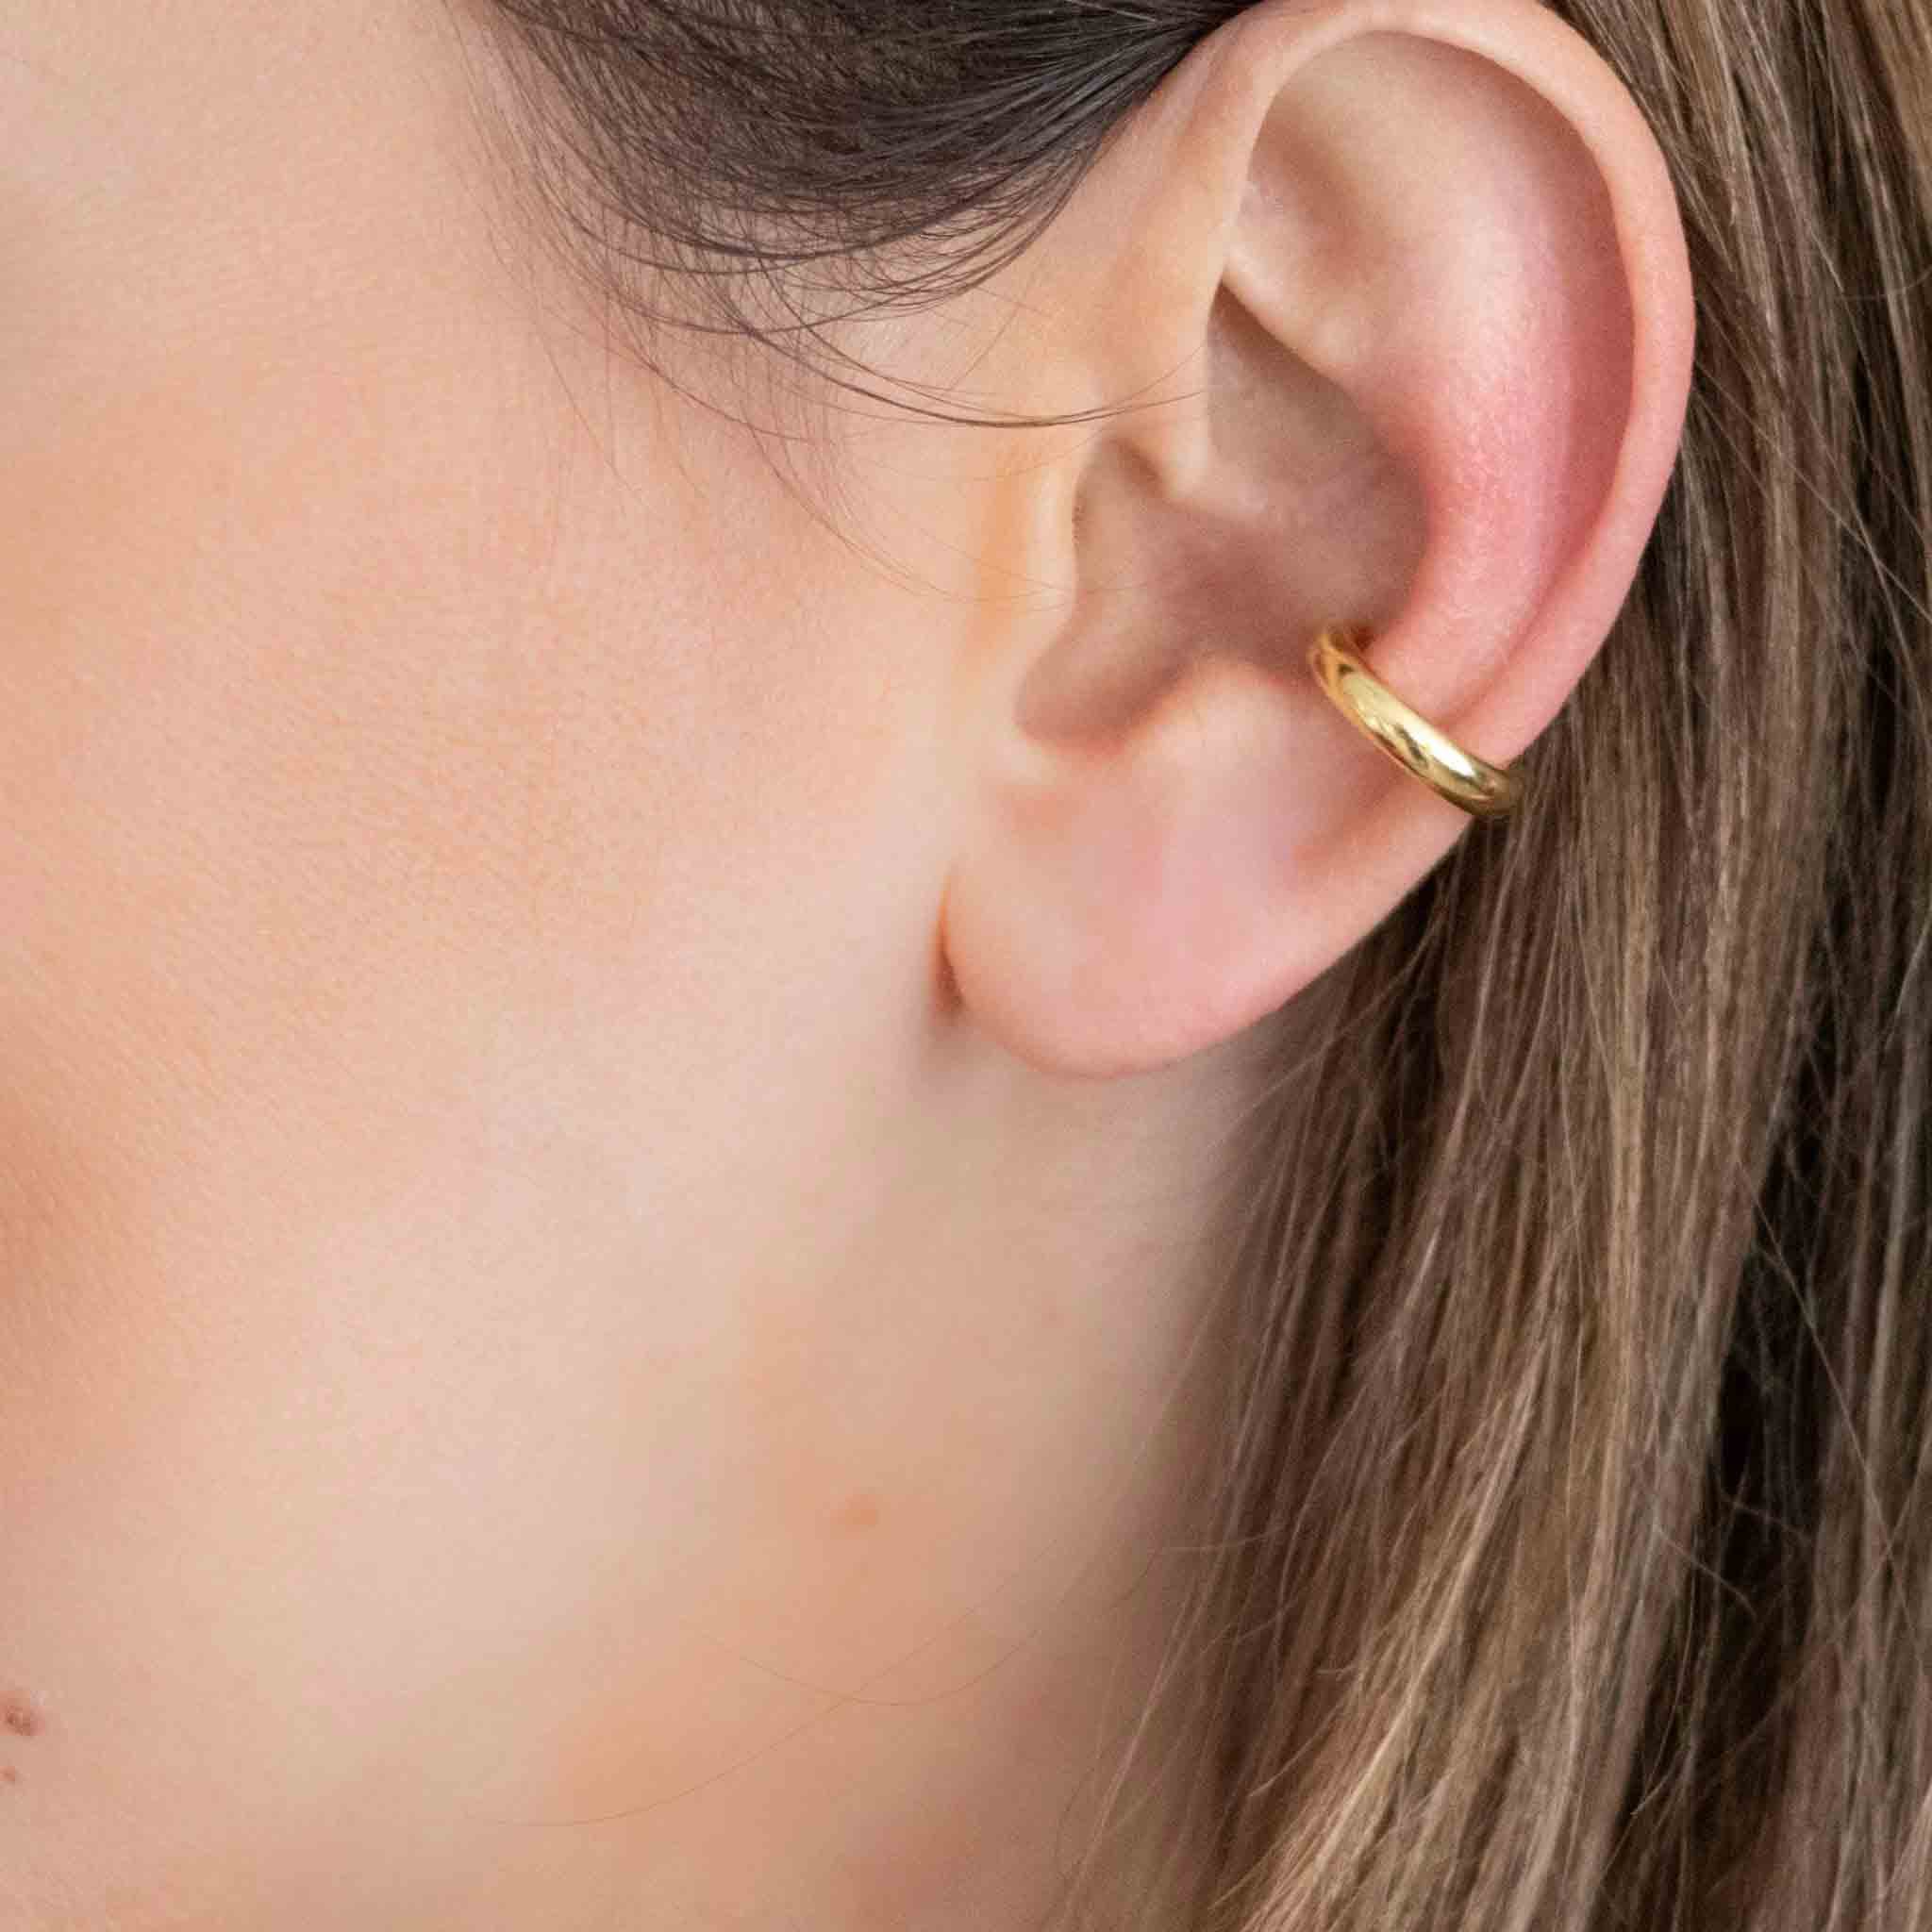 Shop No-Piercing Ear Cuffs | The Curated Lobe